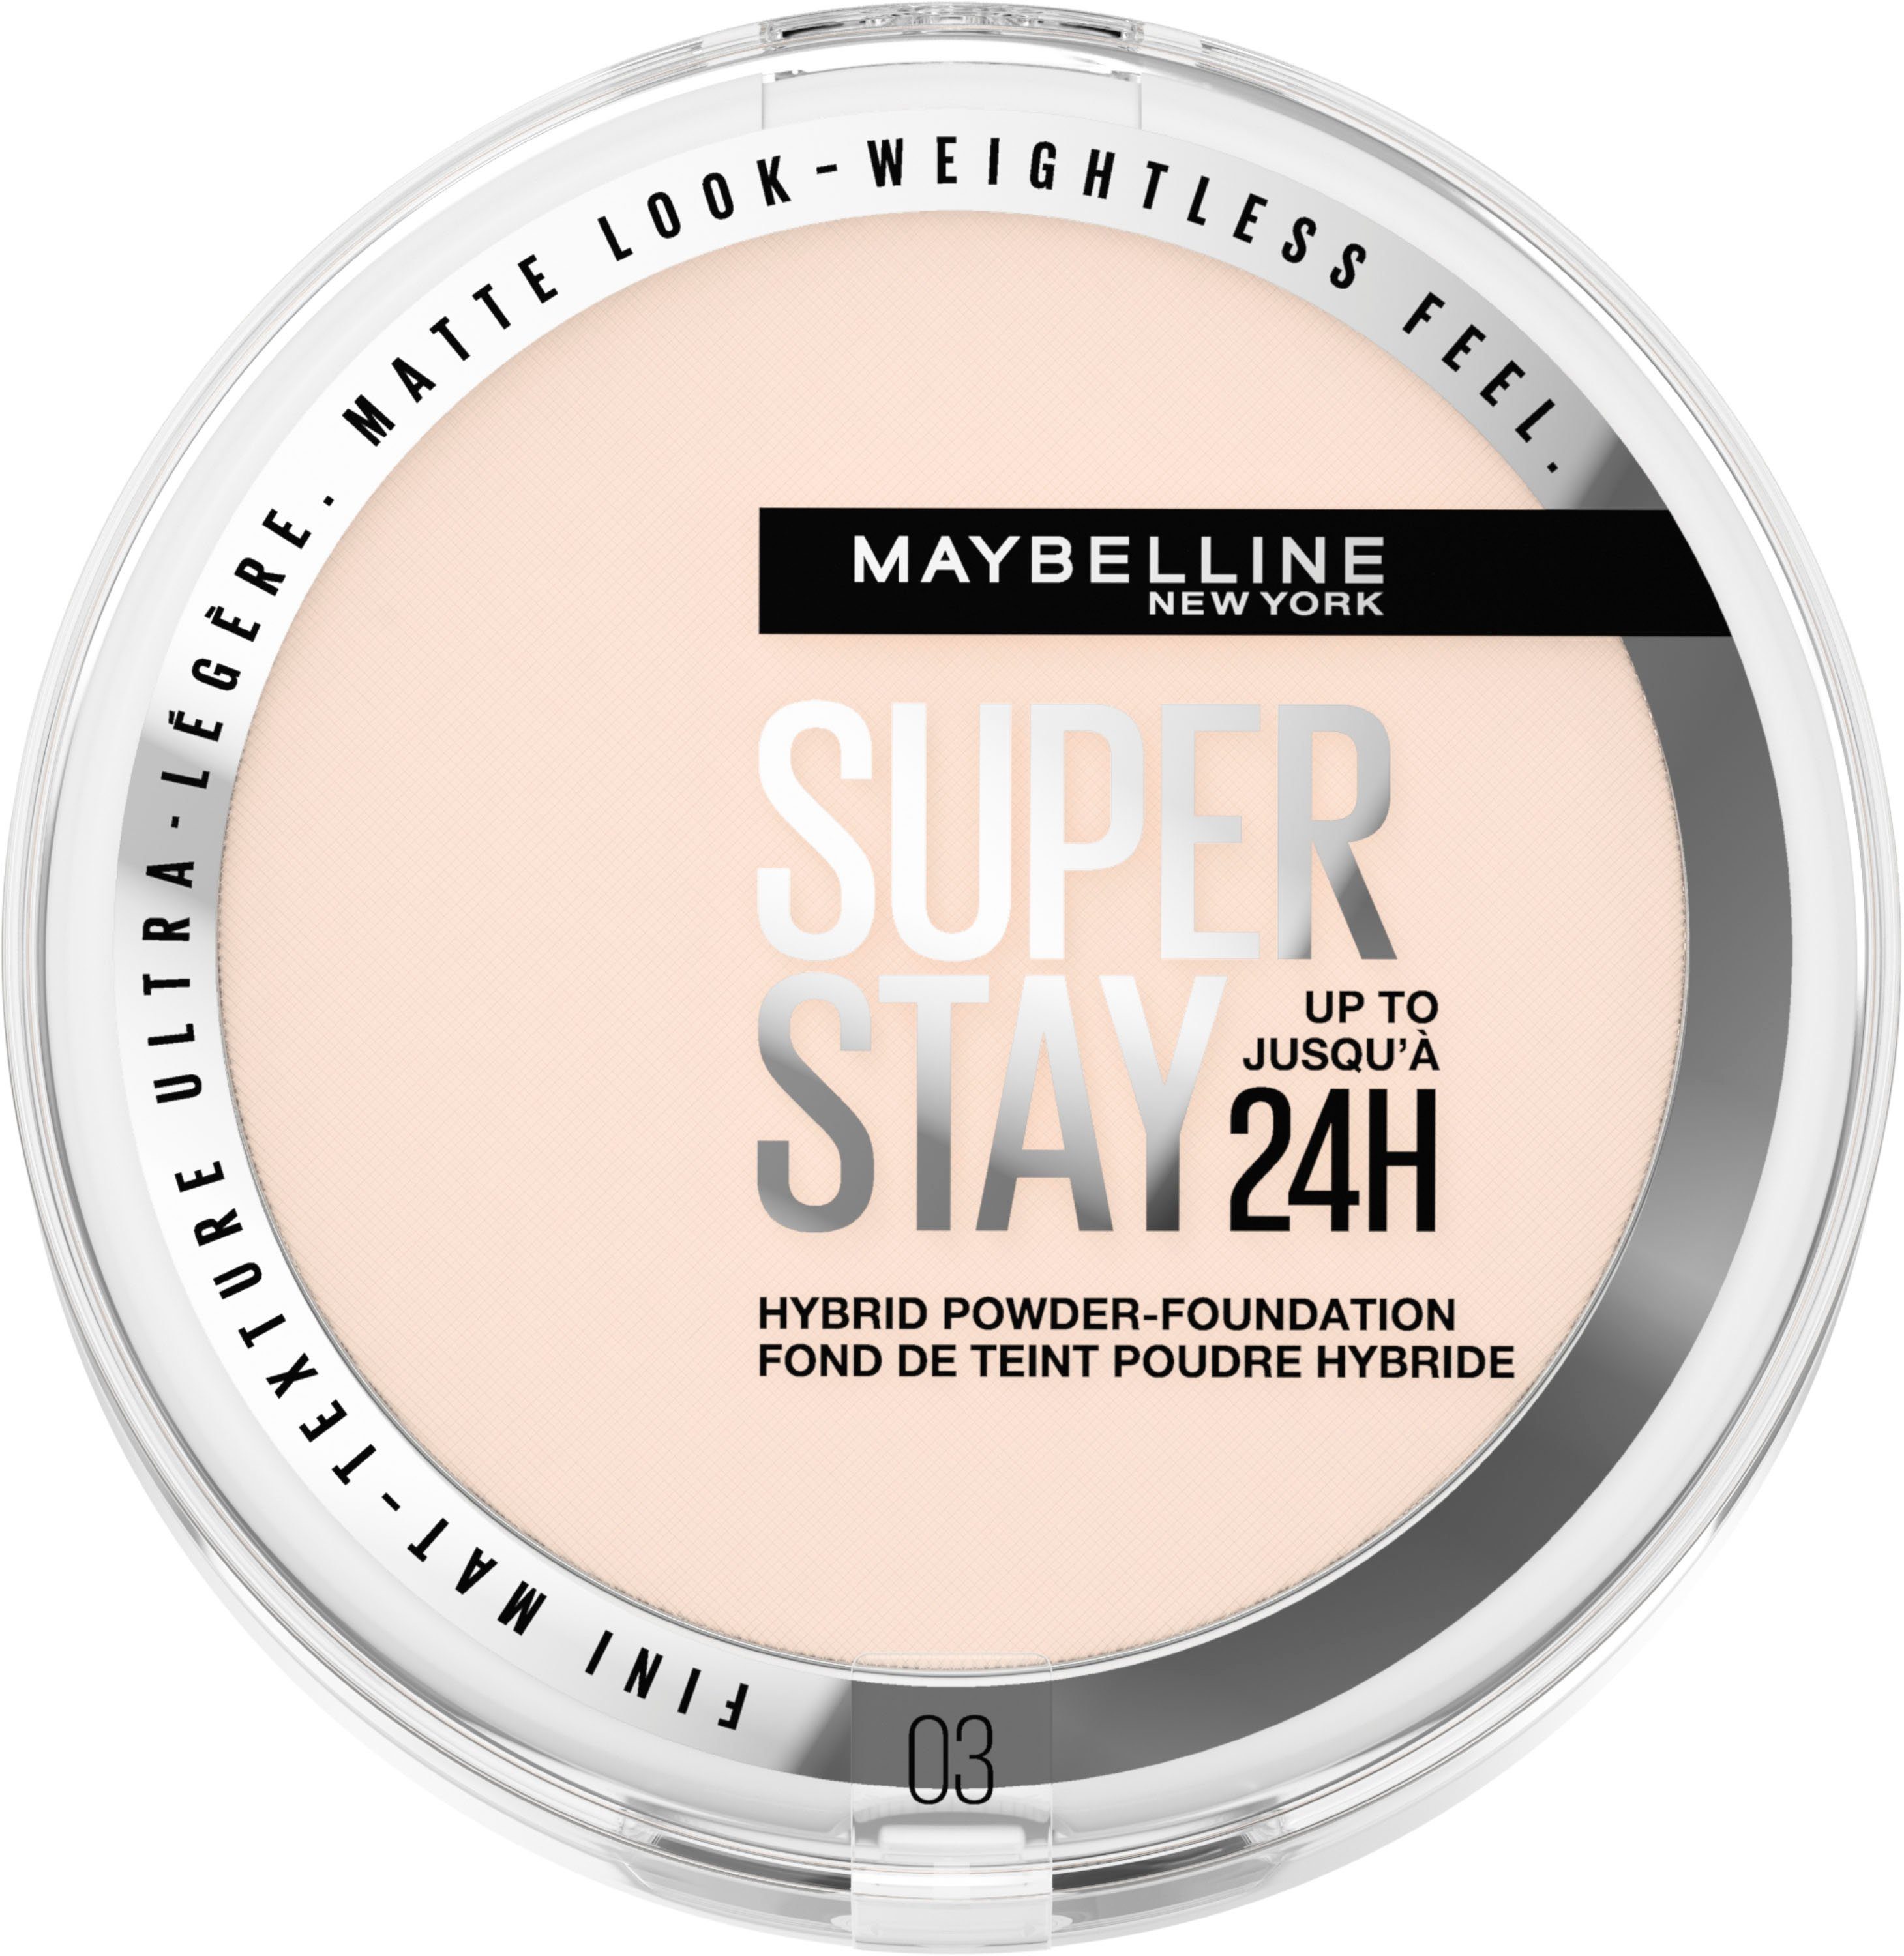 NEW Make-Up Super MAYBELLINE Maybelline Hybrides YORK Foundation Puder Stay New York